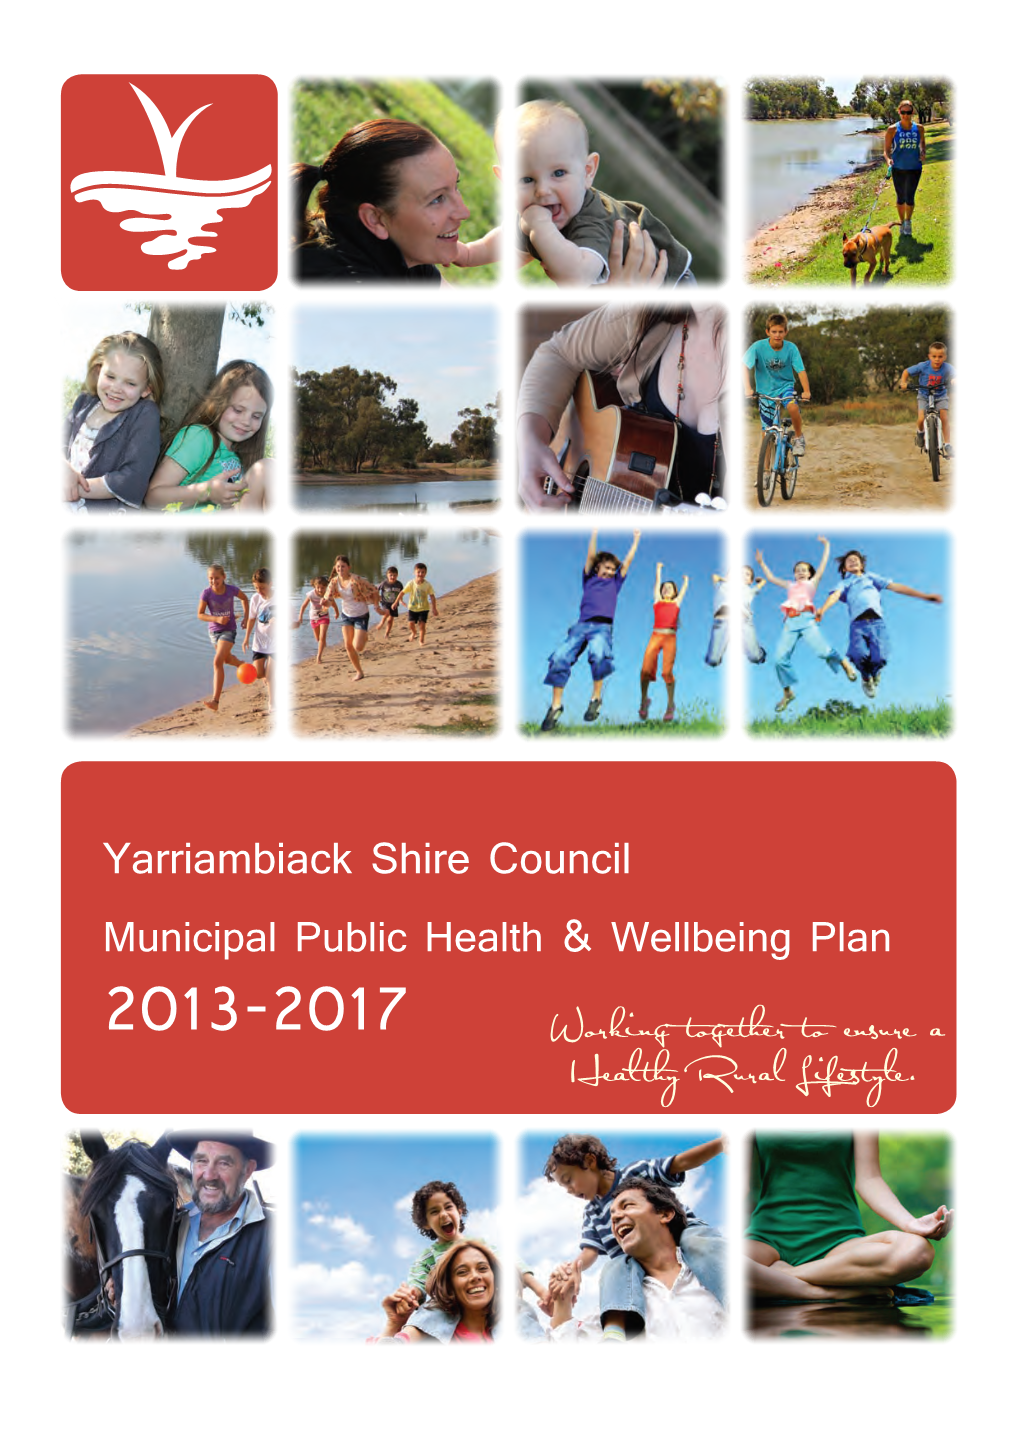 Yarriambiack Shire Council Municipal Public Health & Wellbeing Plan